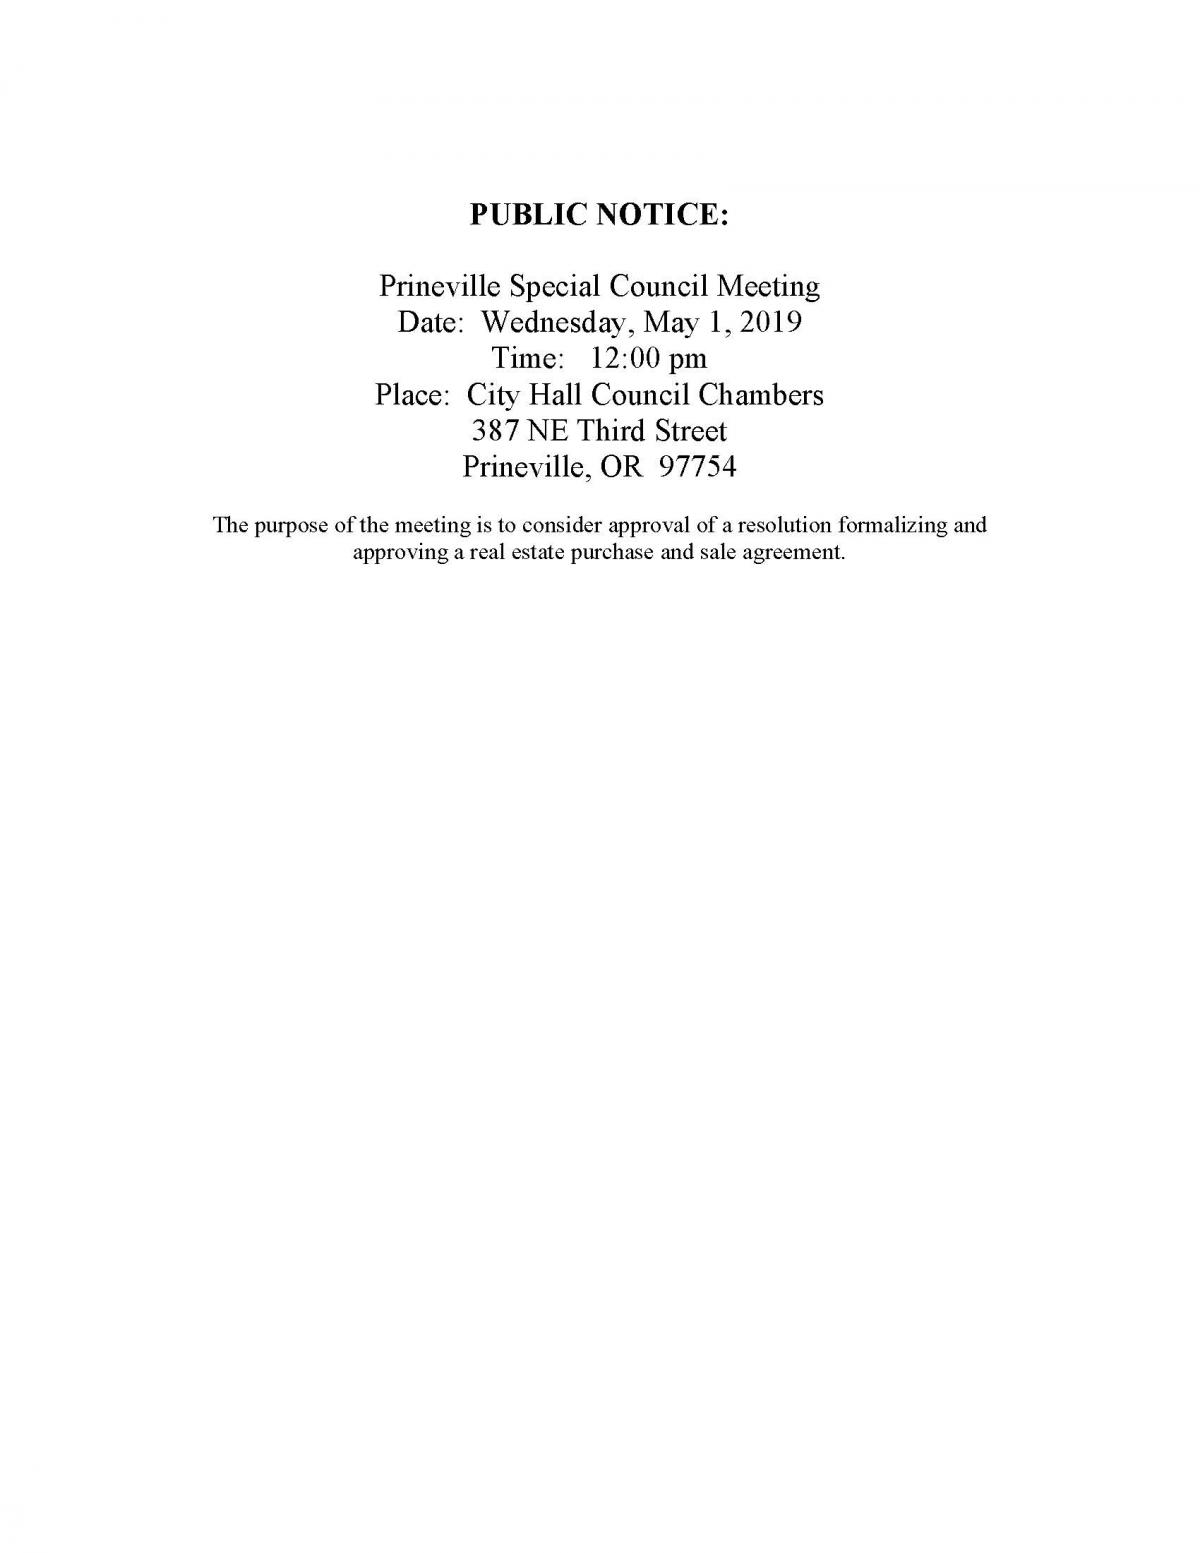 Public Notice - Special Council Meeting 5-1-19